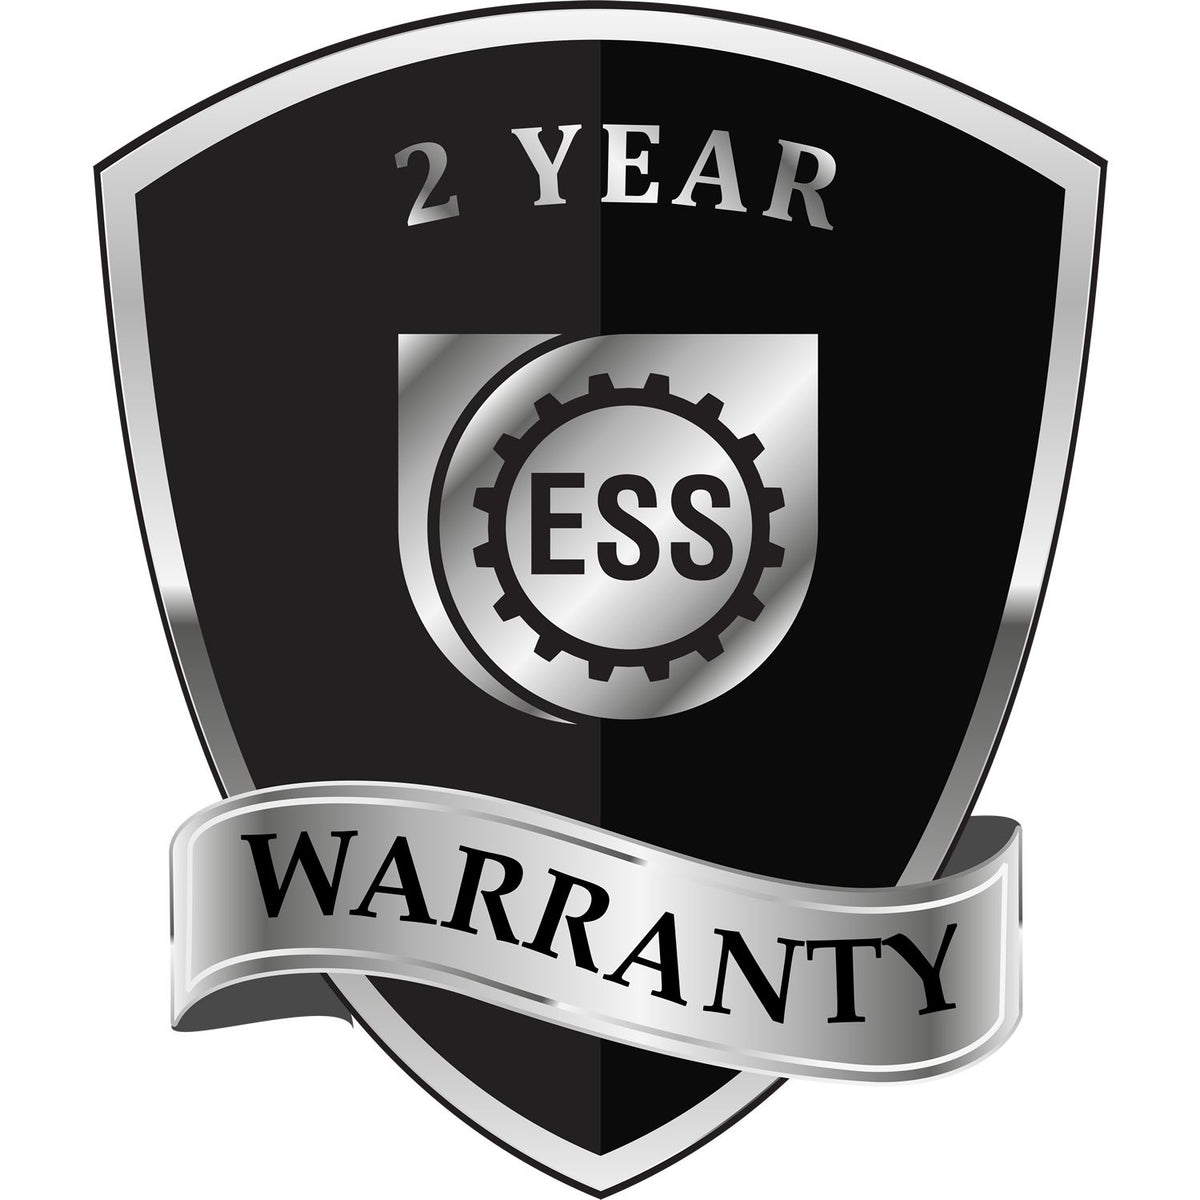 A black and silver badge or emblem showing warranty information for the Gift Virginia Land Surveyor Seal